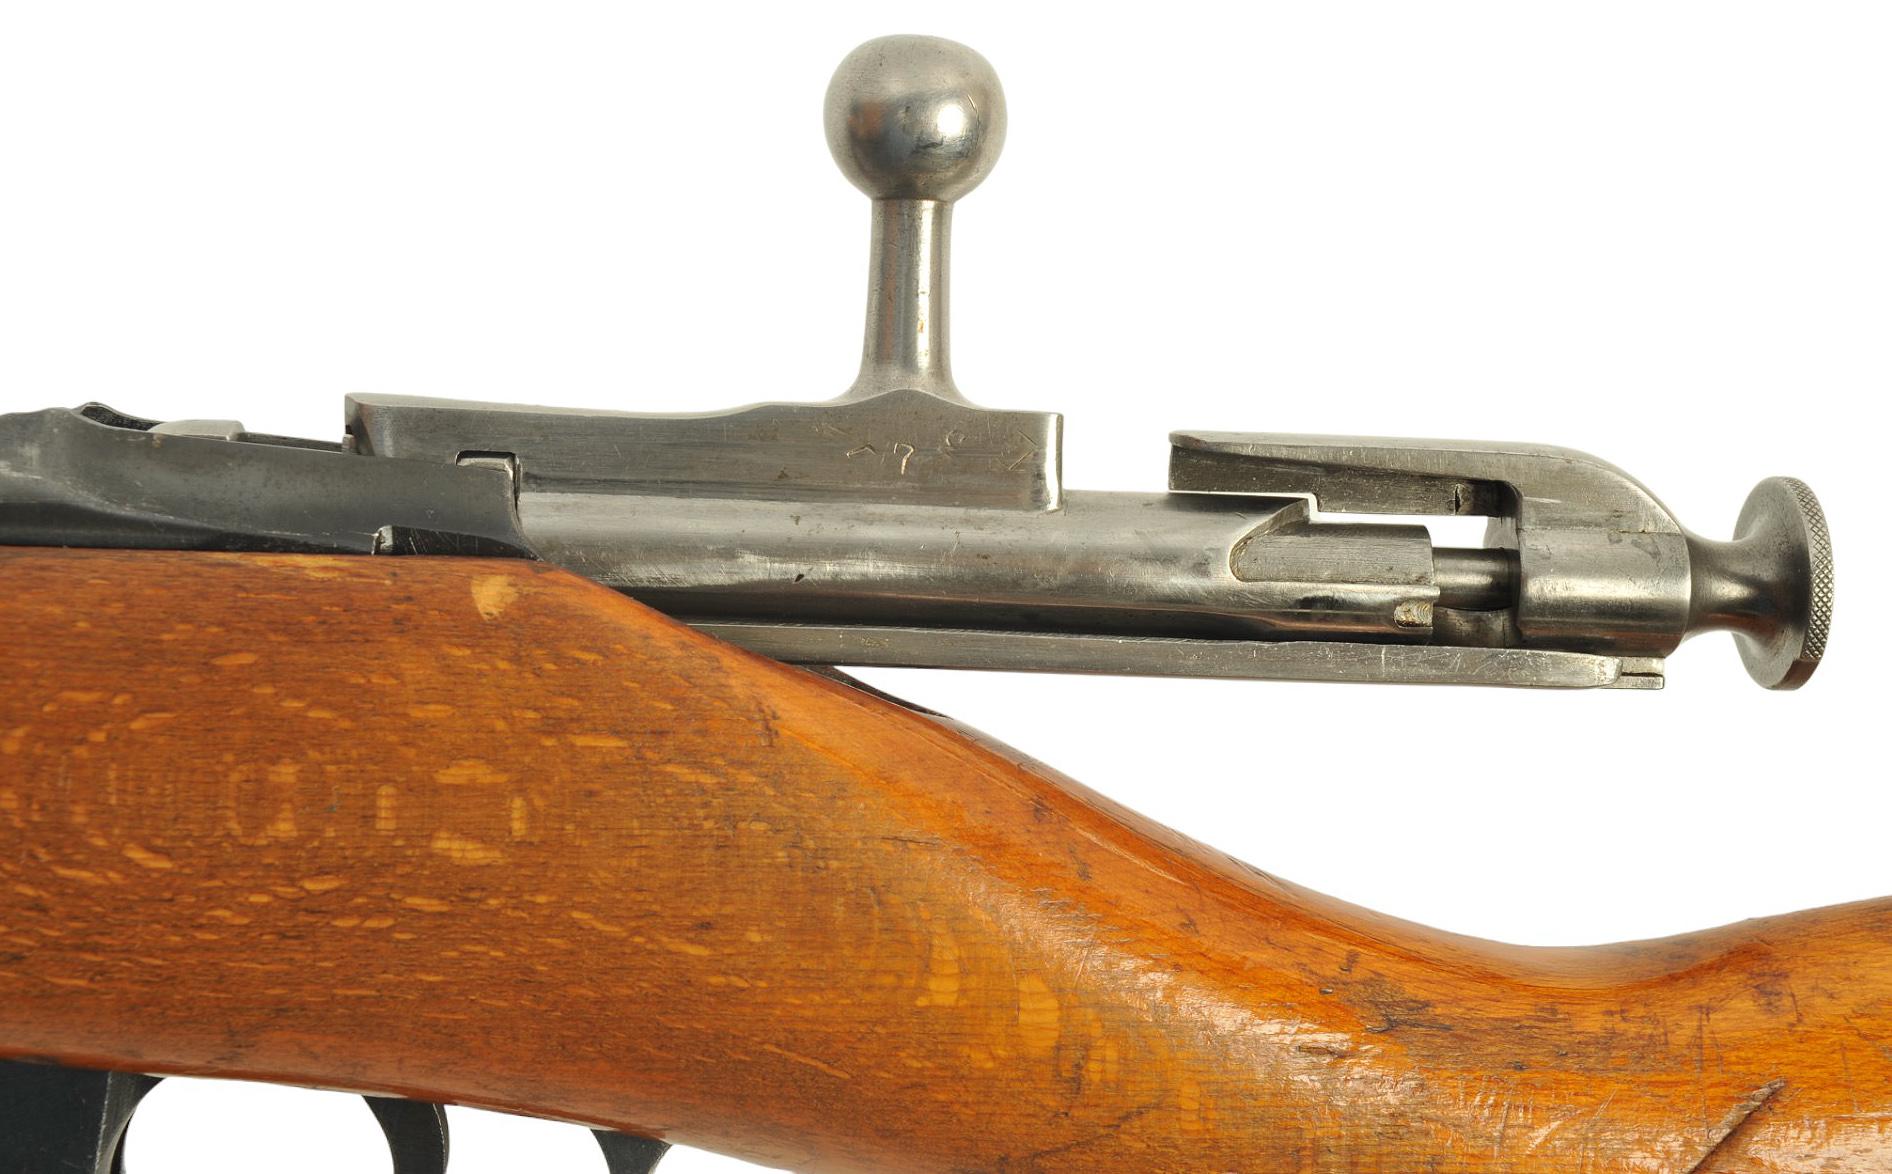 Bulgarian/Russian M1891/59 7.62x54MMr Bolt-action Rifle FFL Required: LP 4836 (C1B1)